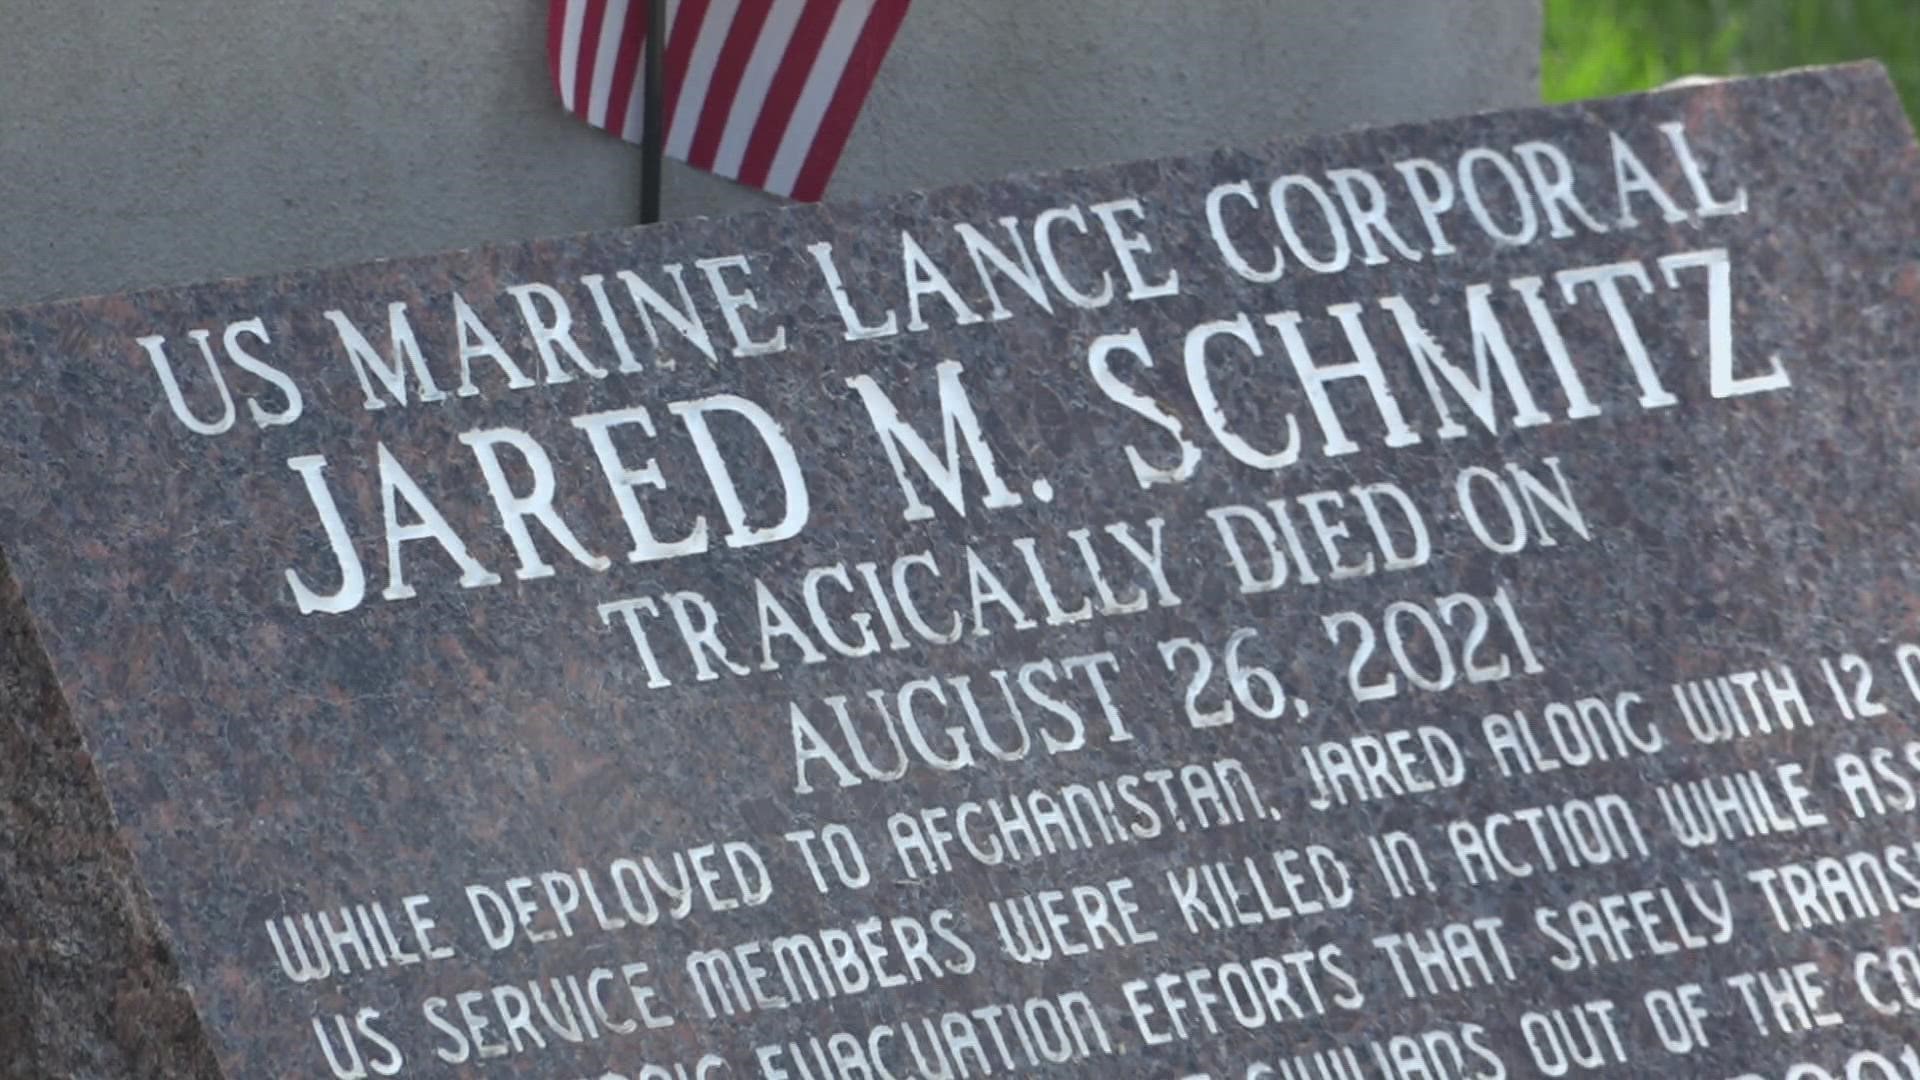 Blues to honor fallen St. Louis area Marine Jared Schmitz